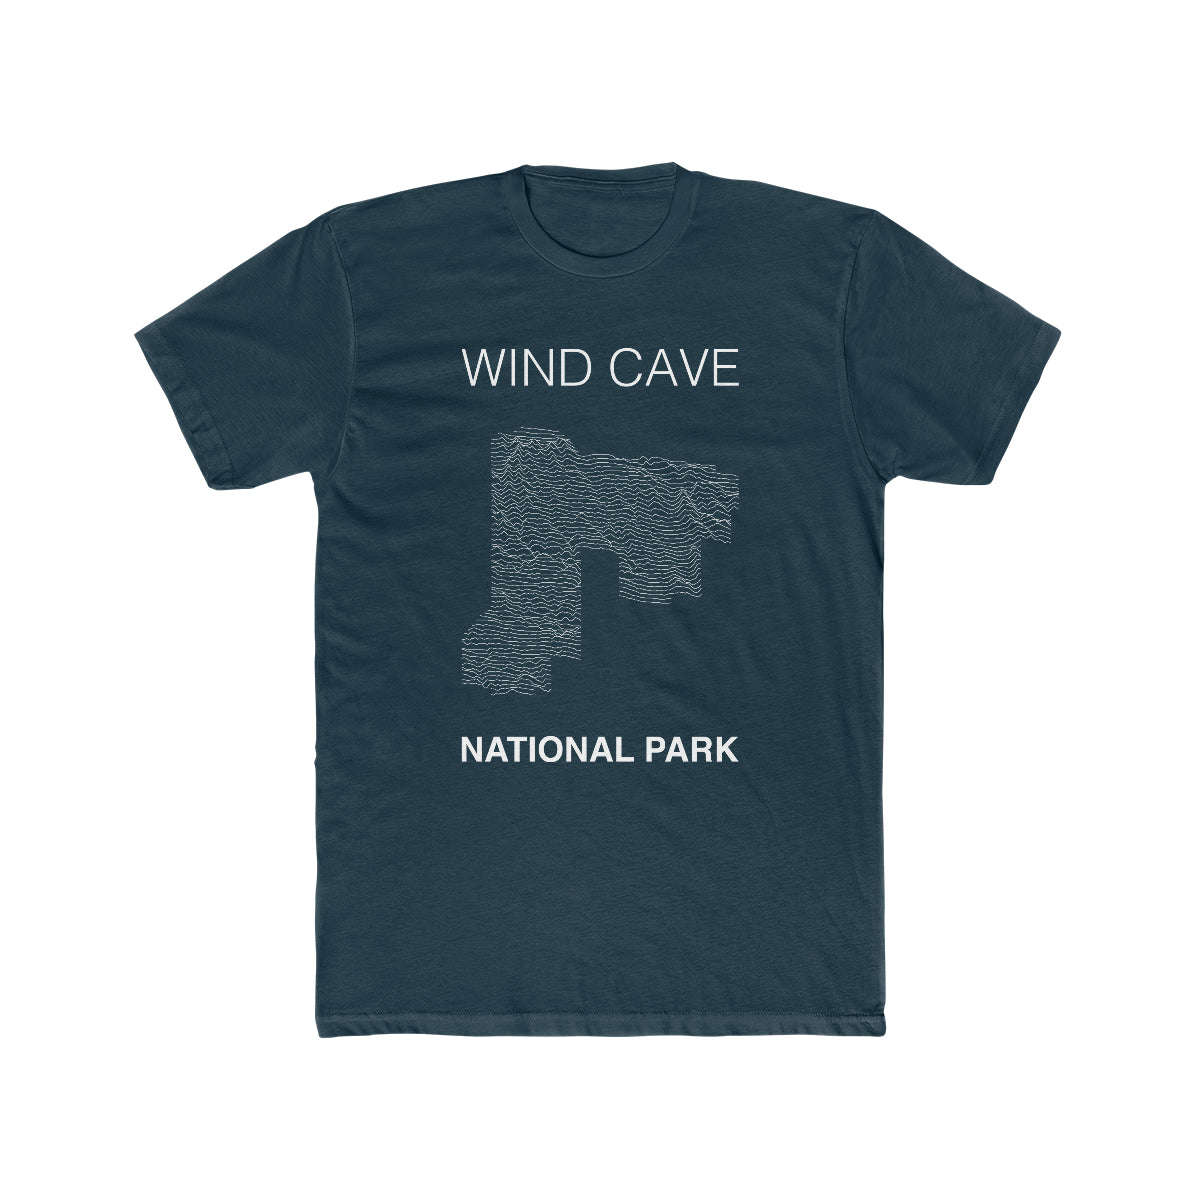 Wind Cave National Park T-Shirt Lines